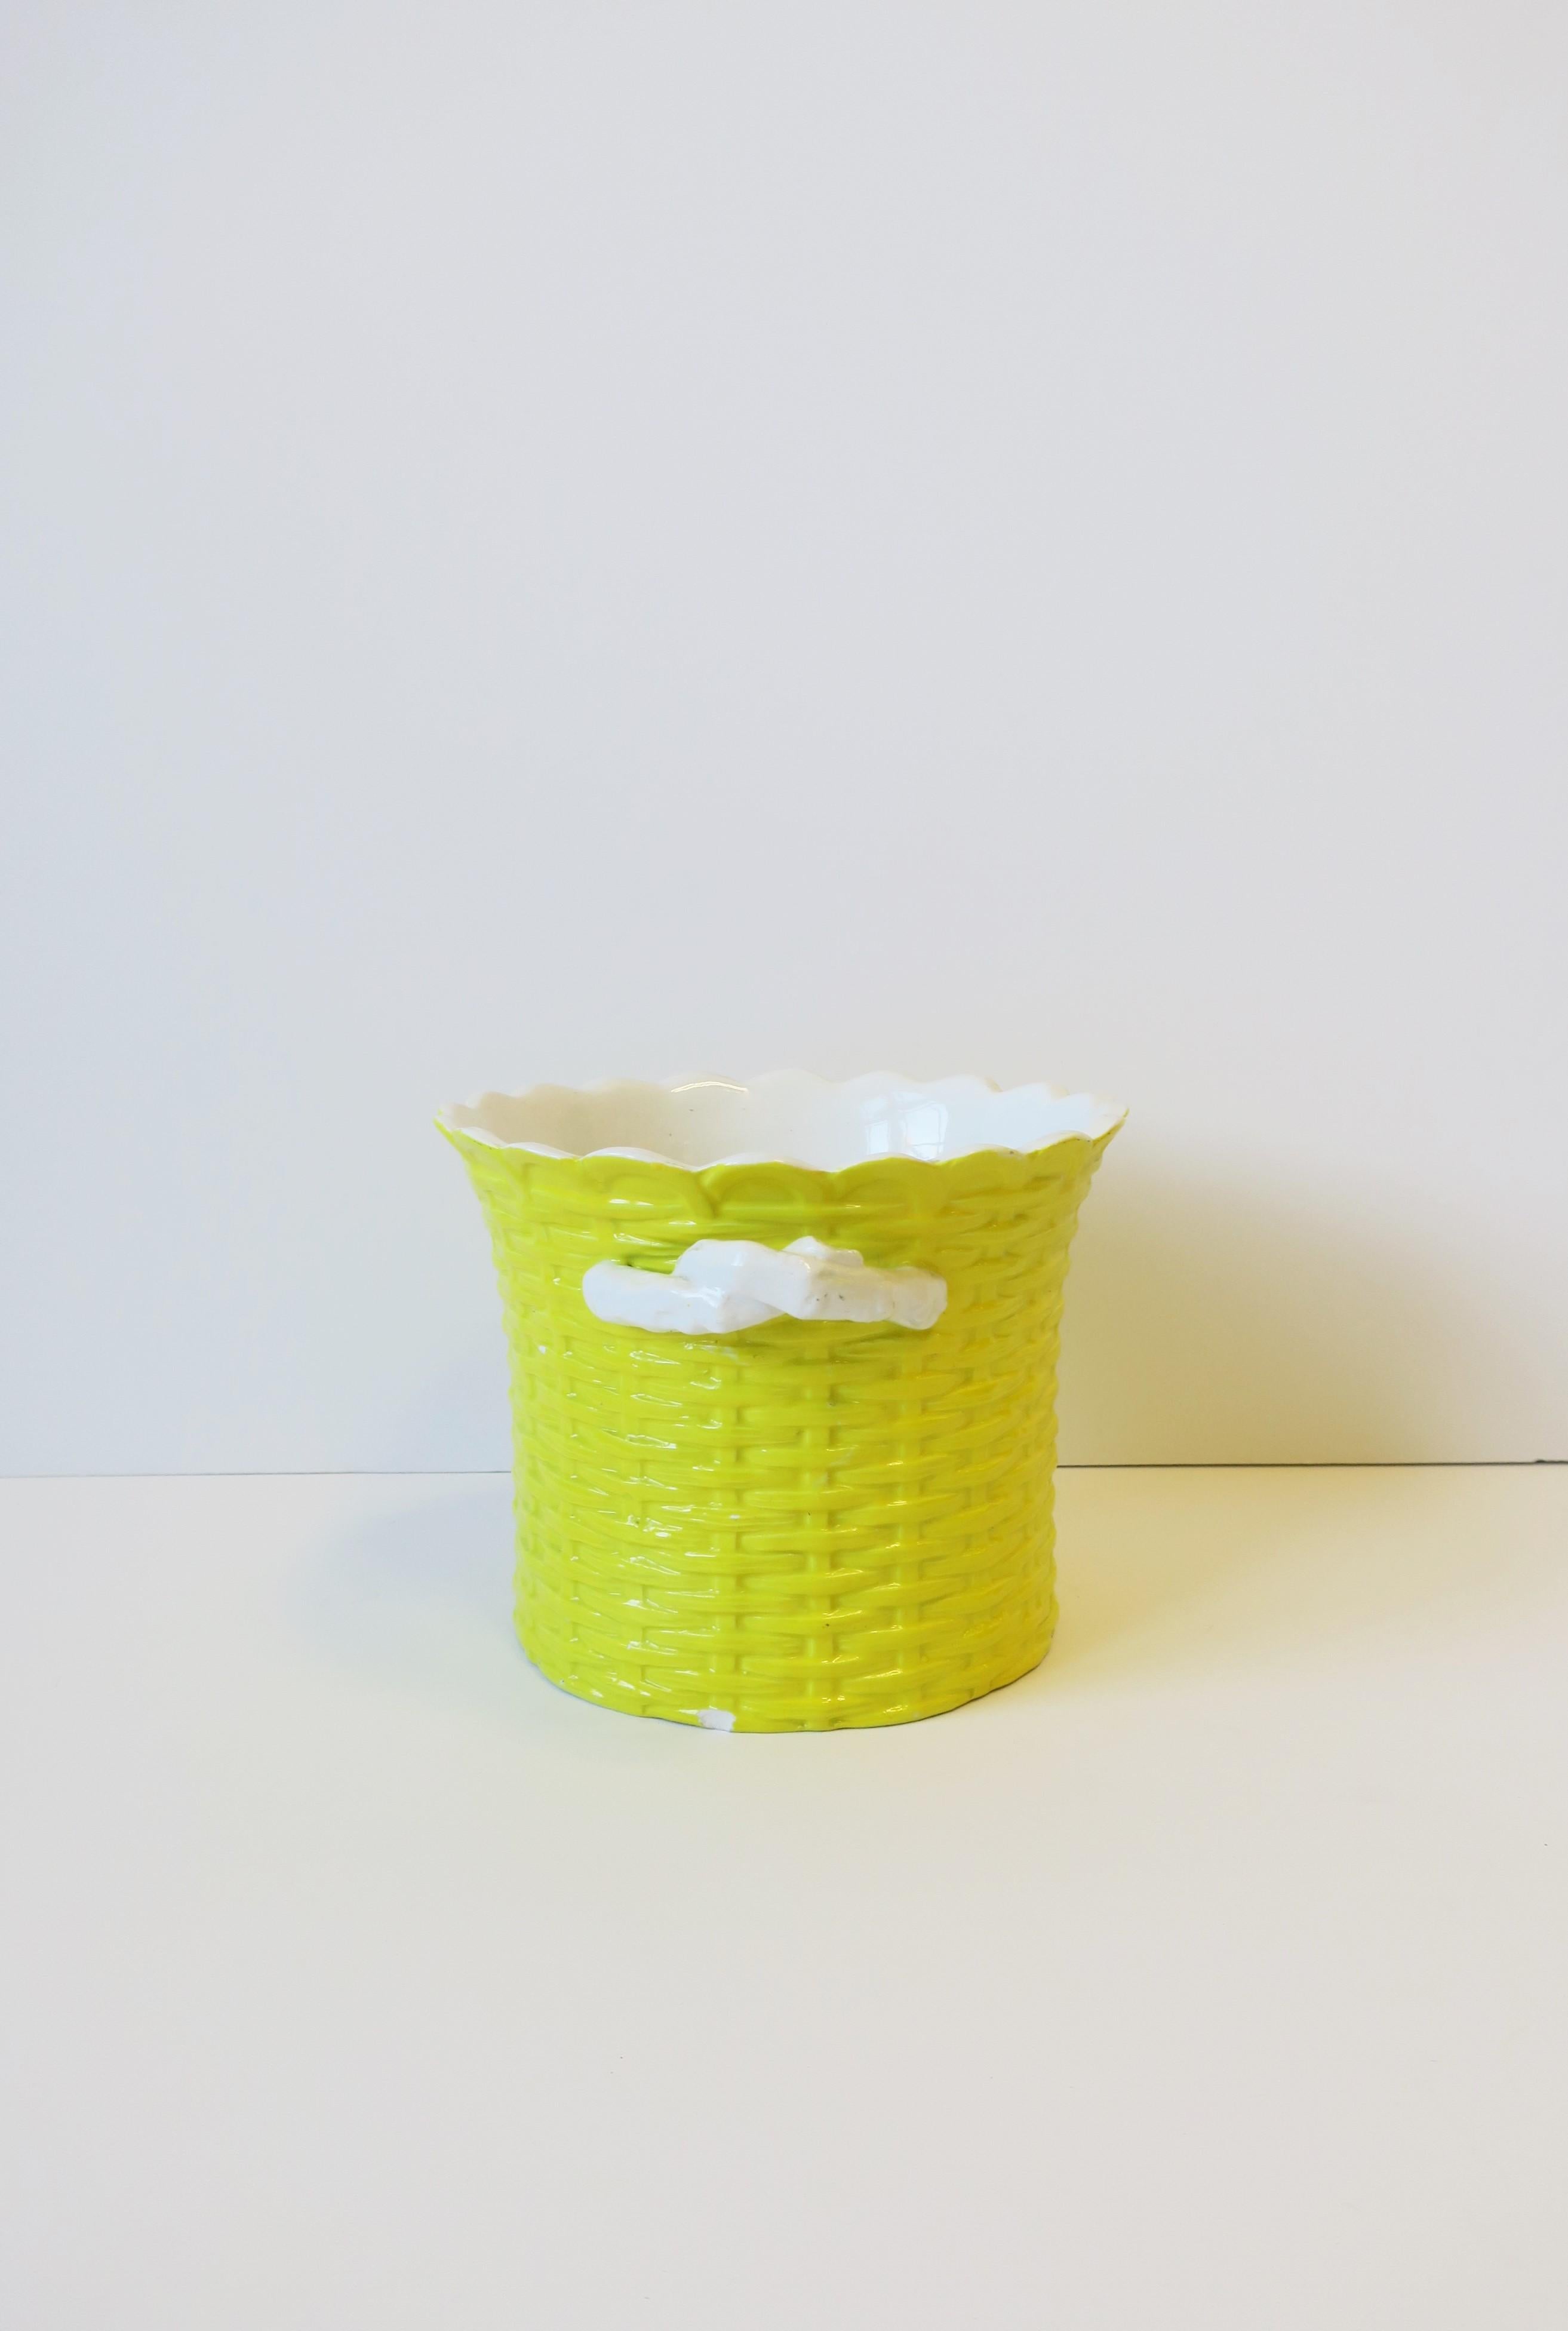 Italian Yellow Ceramic Wicker Ice Bucket or Cachepot w/Scalloped Edge, 1960s 1